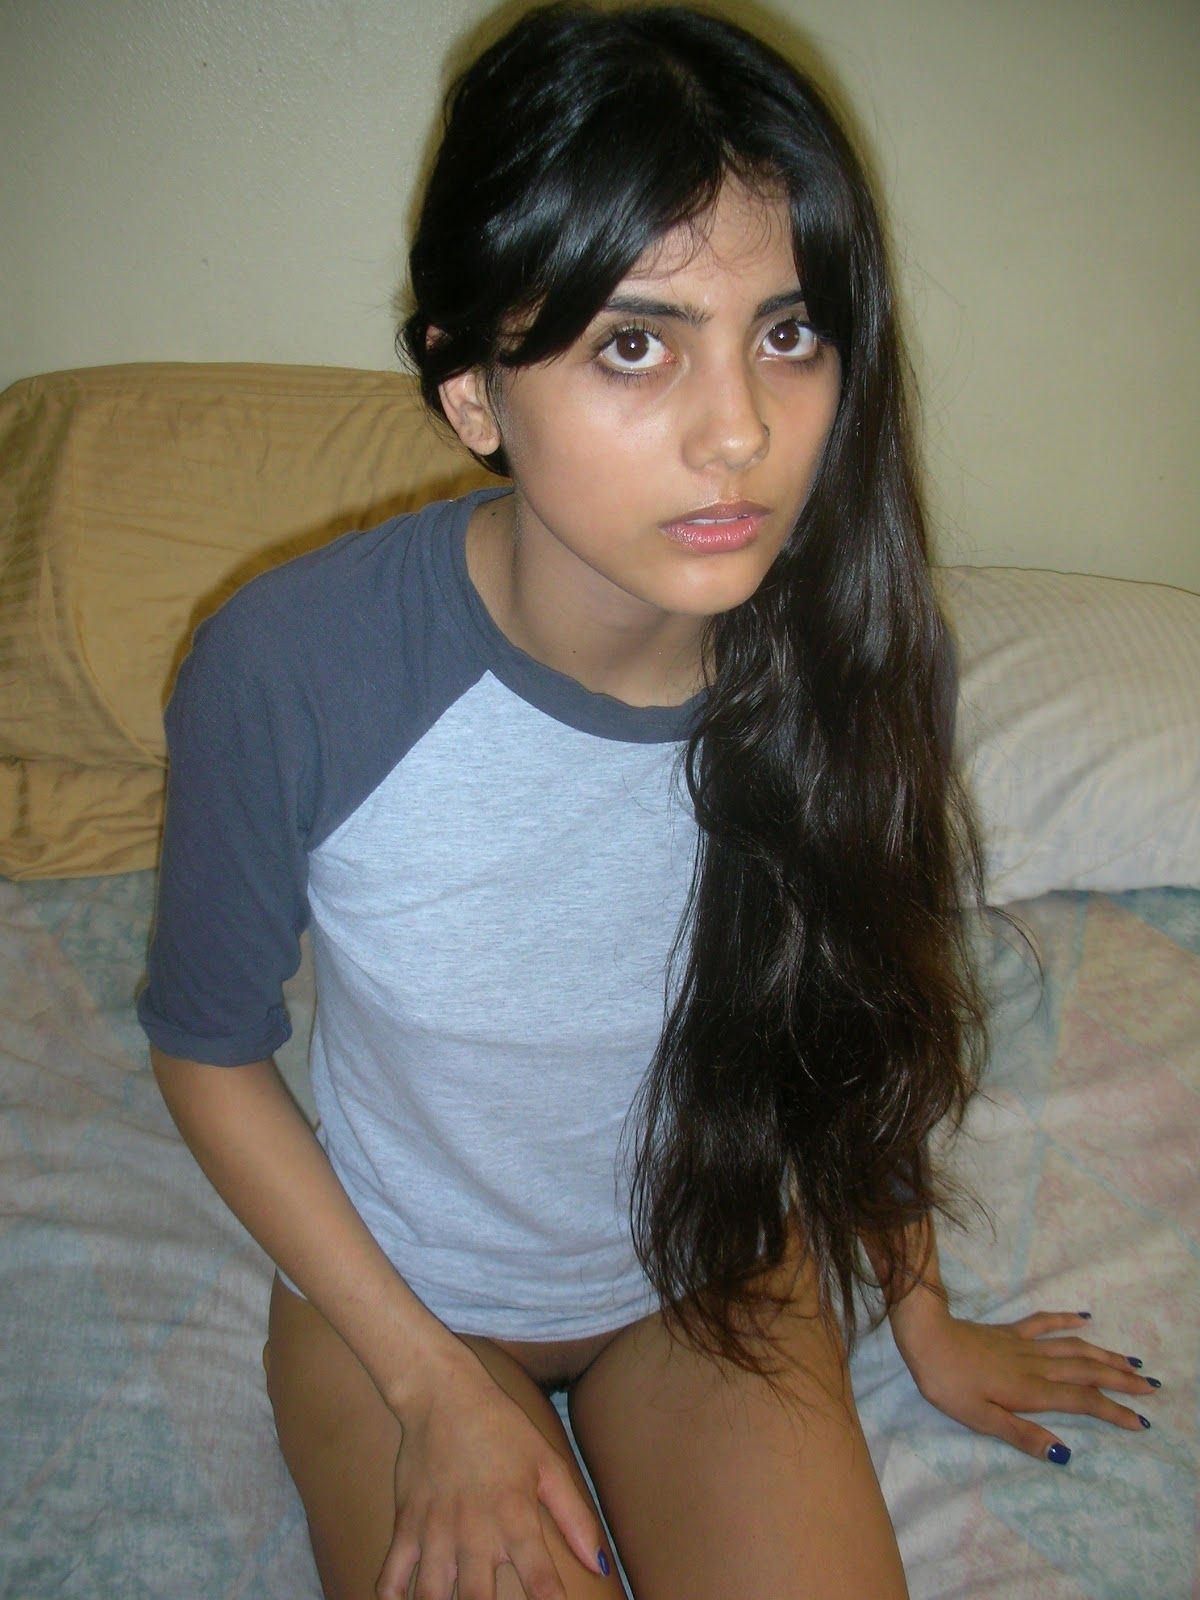 pakistan panty nud girl image hd pic